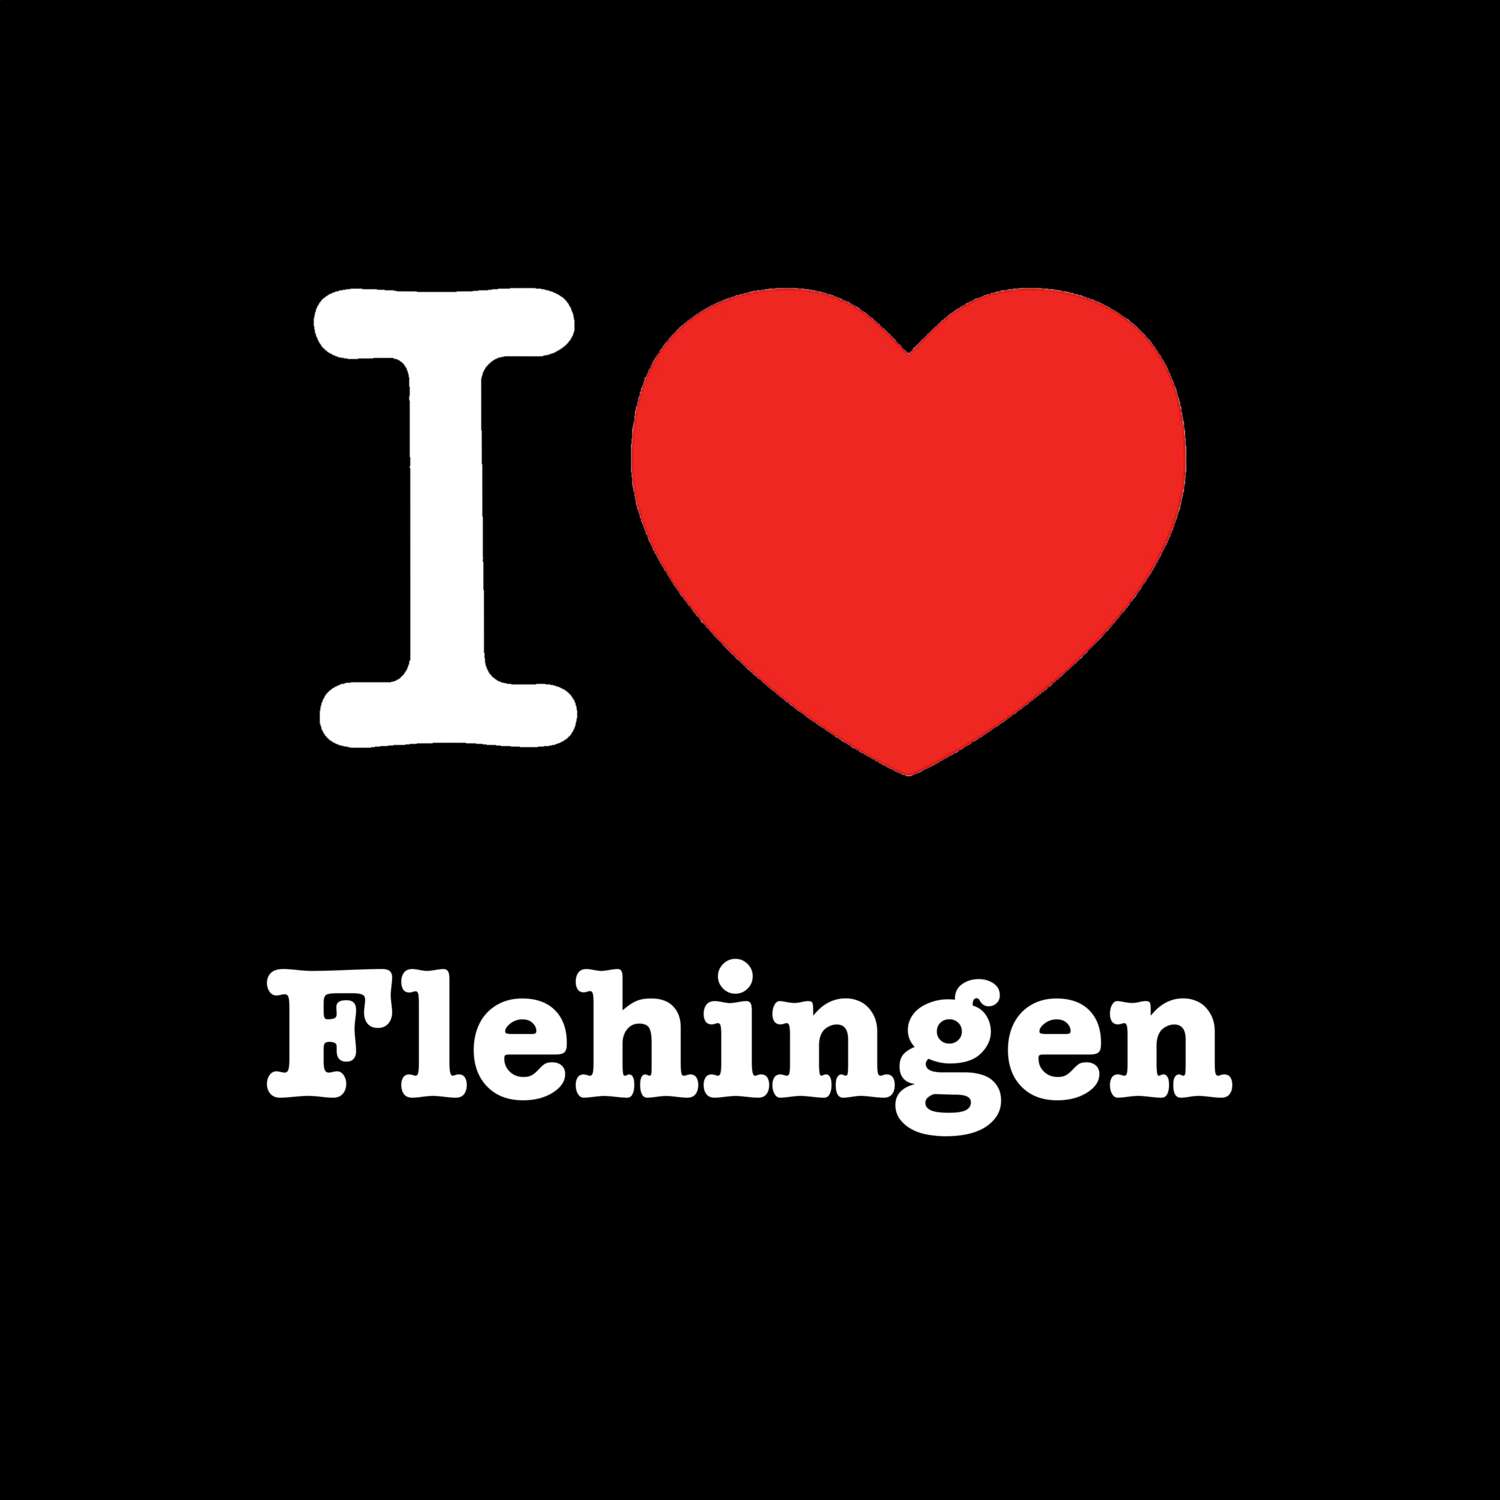 Flehingen T-Shirt »I love«